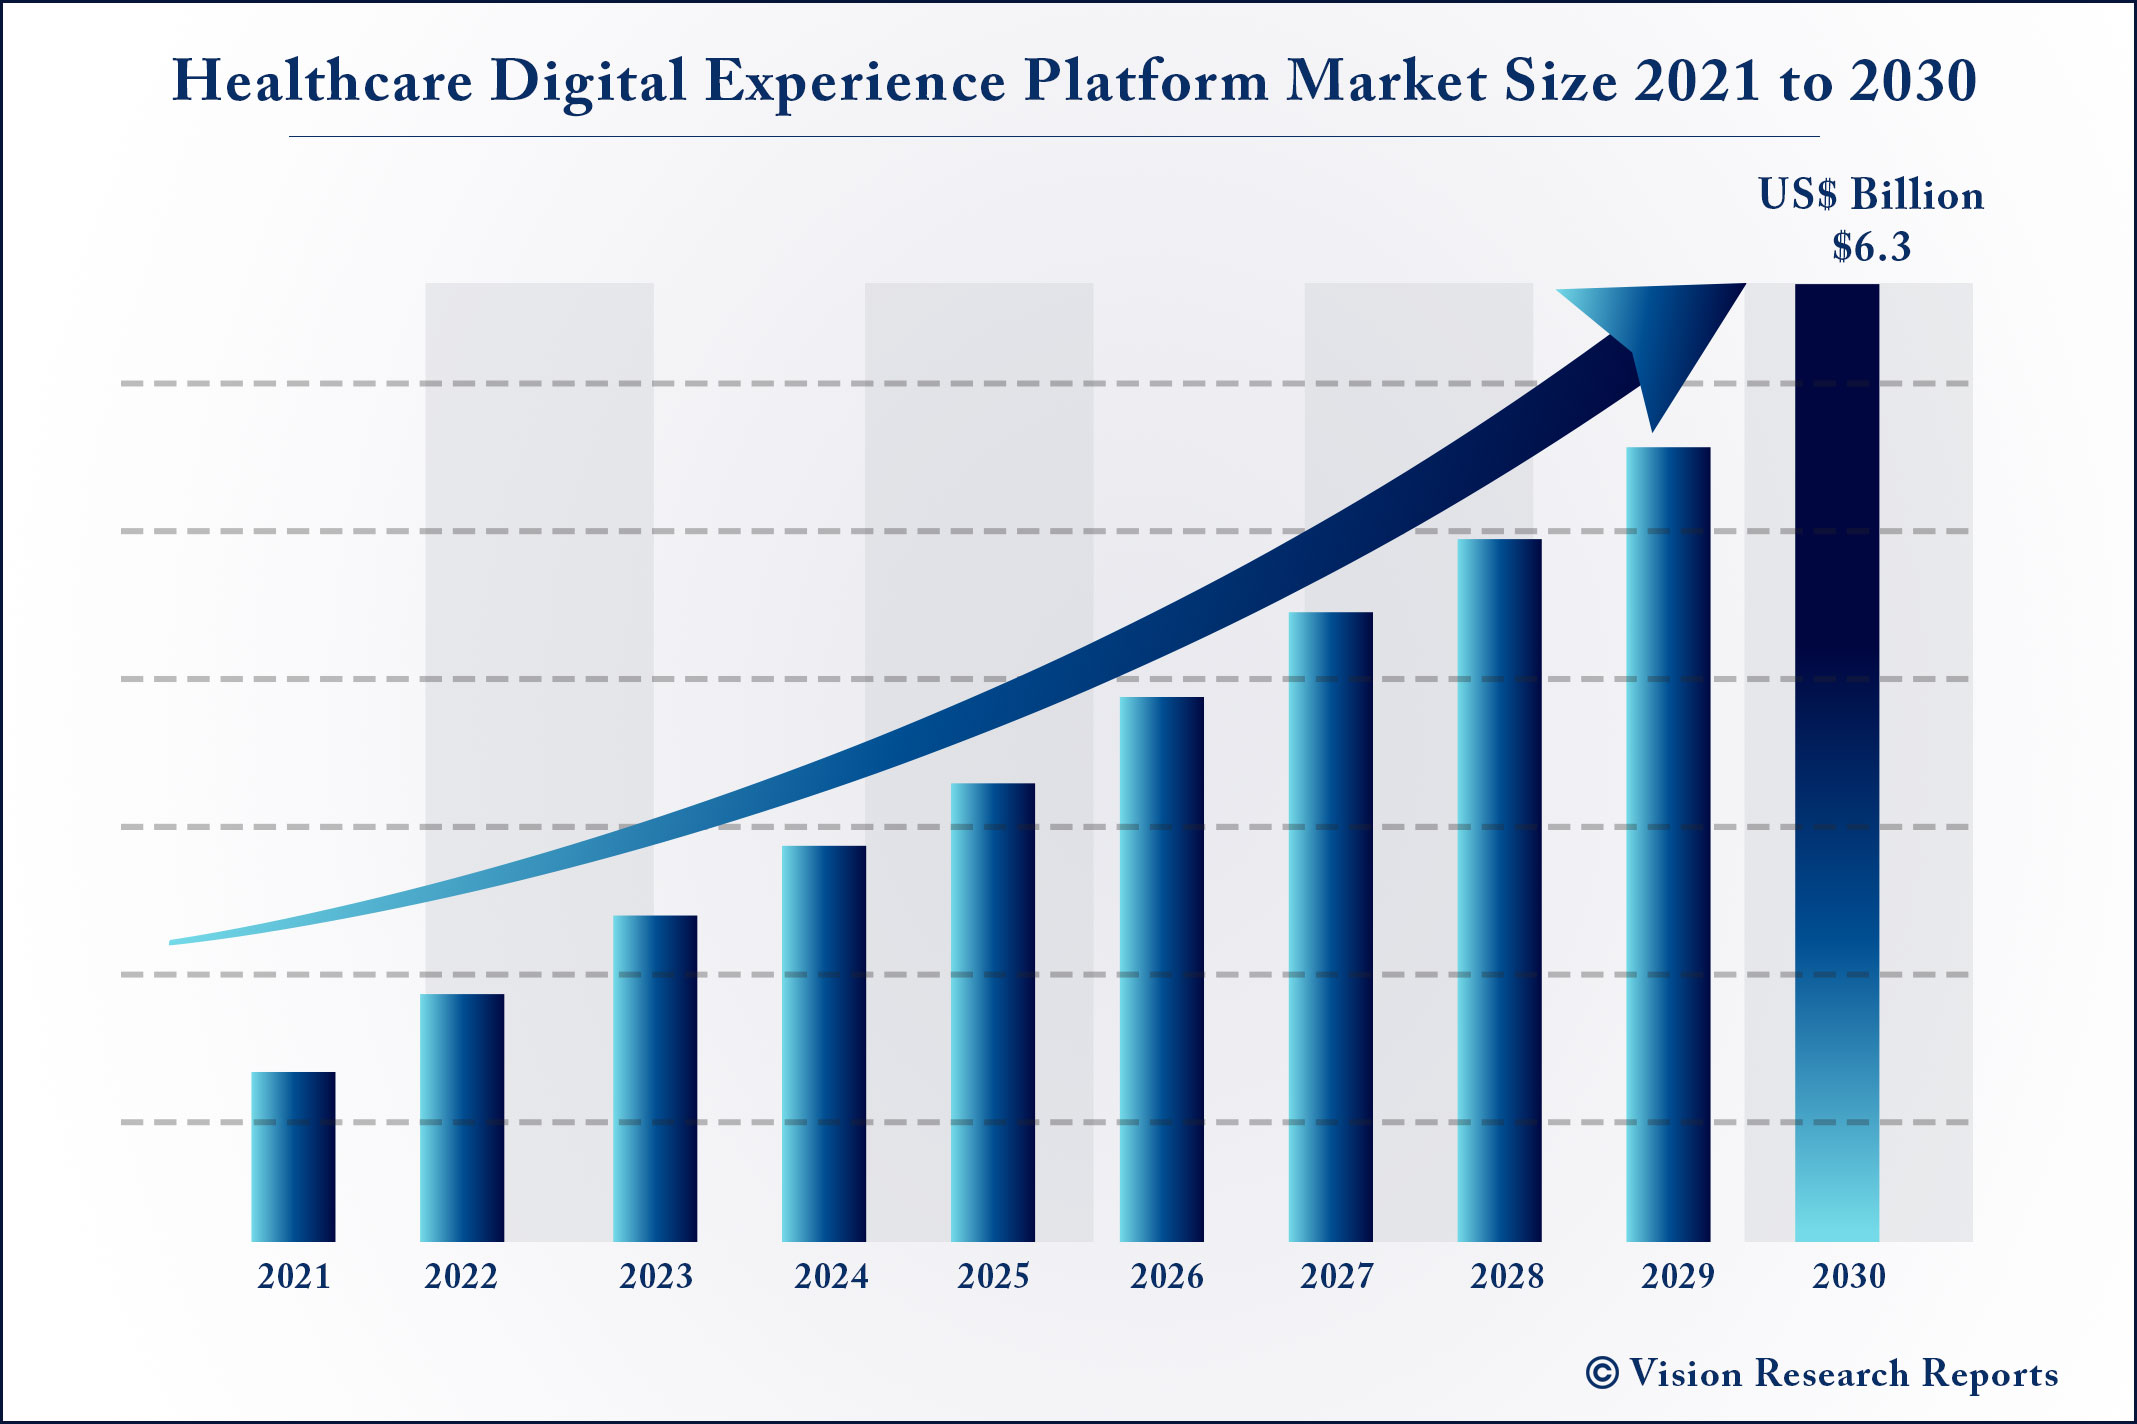 Healthcare Digital Experience Platform Market Size 2021 to 2030